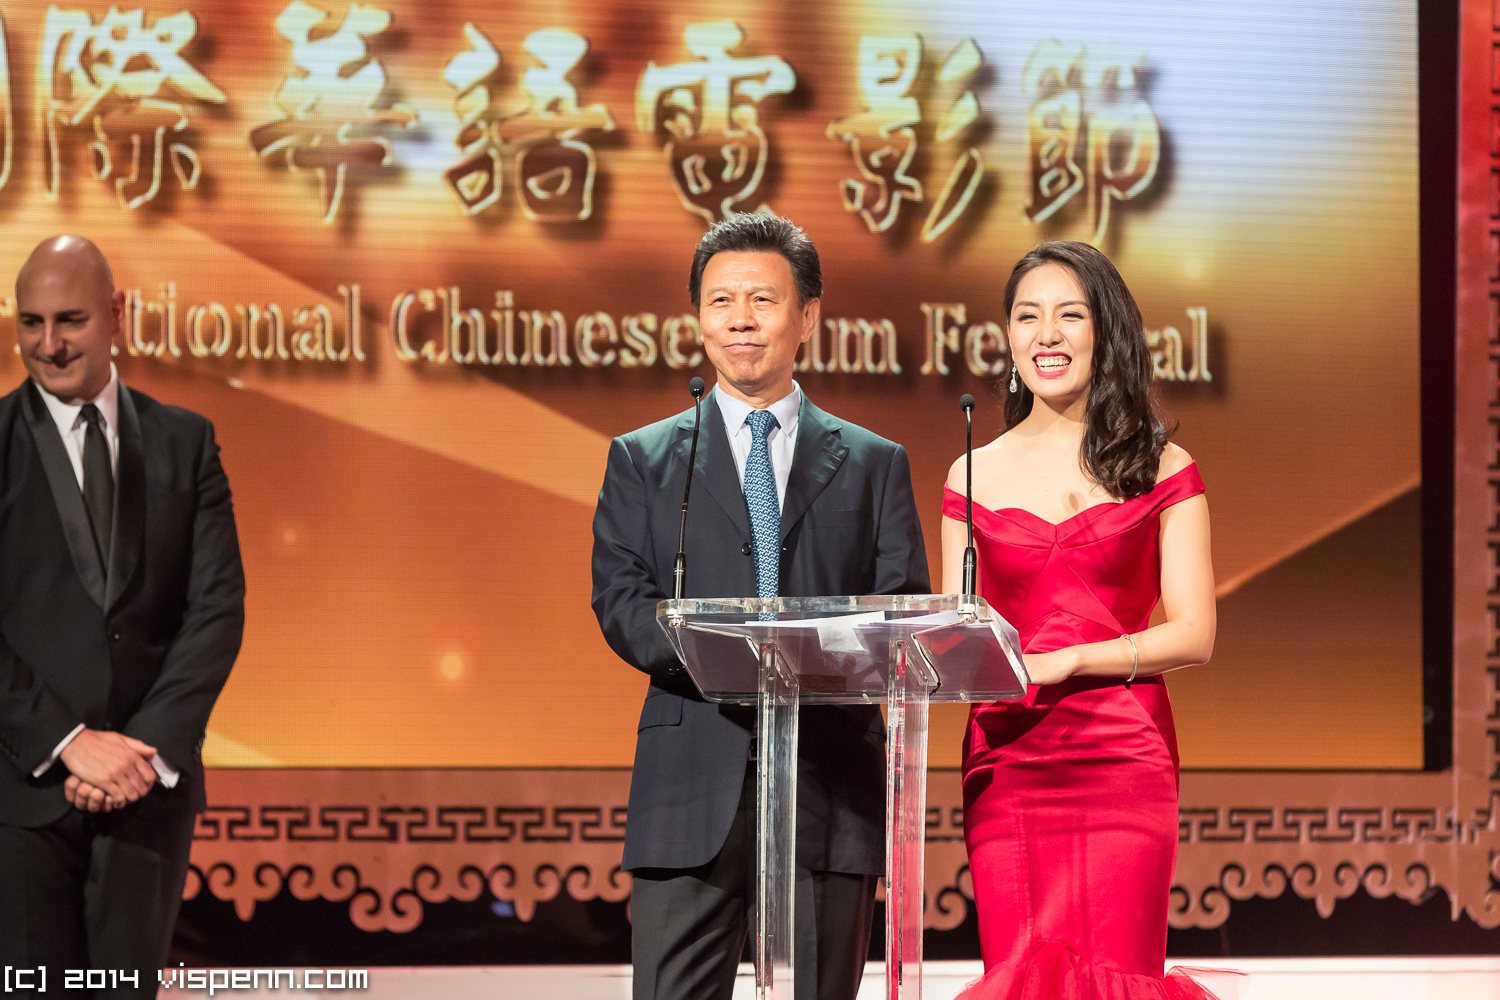 International Chinese Film Festival Awards Ceremony 2014